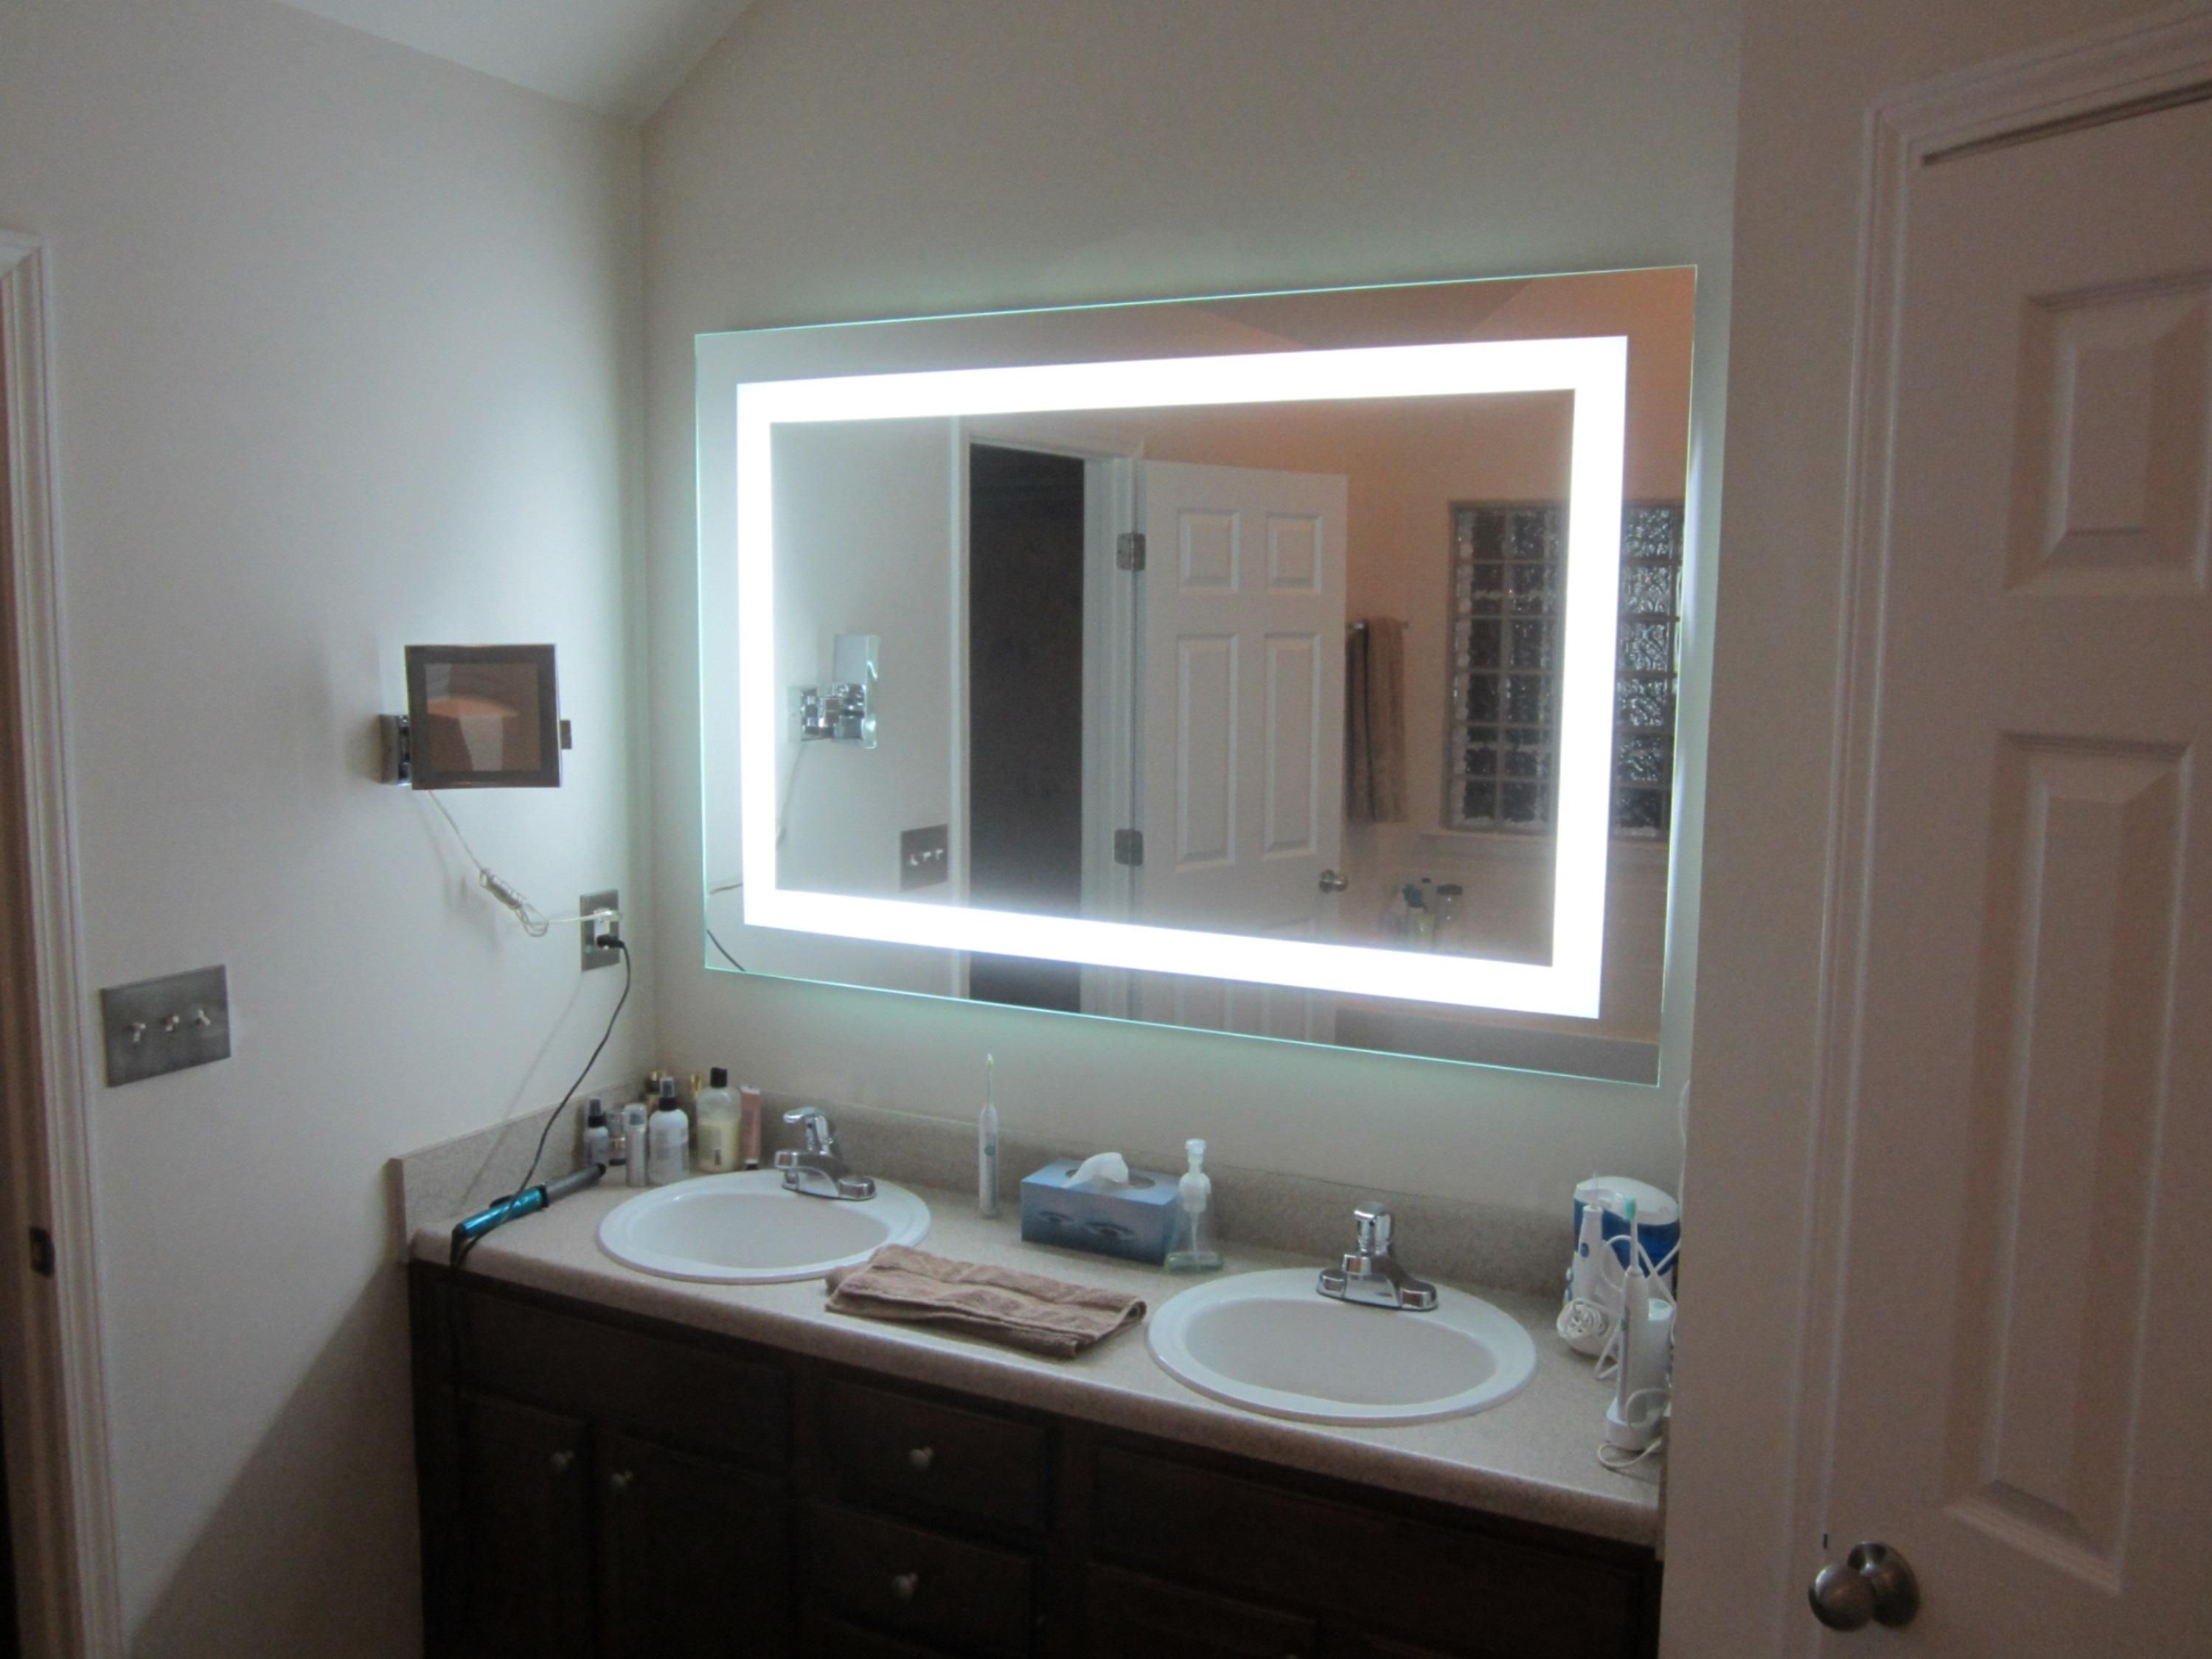 Bedroom Lighted Vanity Mirror Magnified Mirror Vanity Mirrors Throughout Magnified Vanity Mirrors (View 12 of 20)